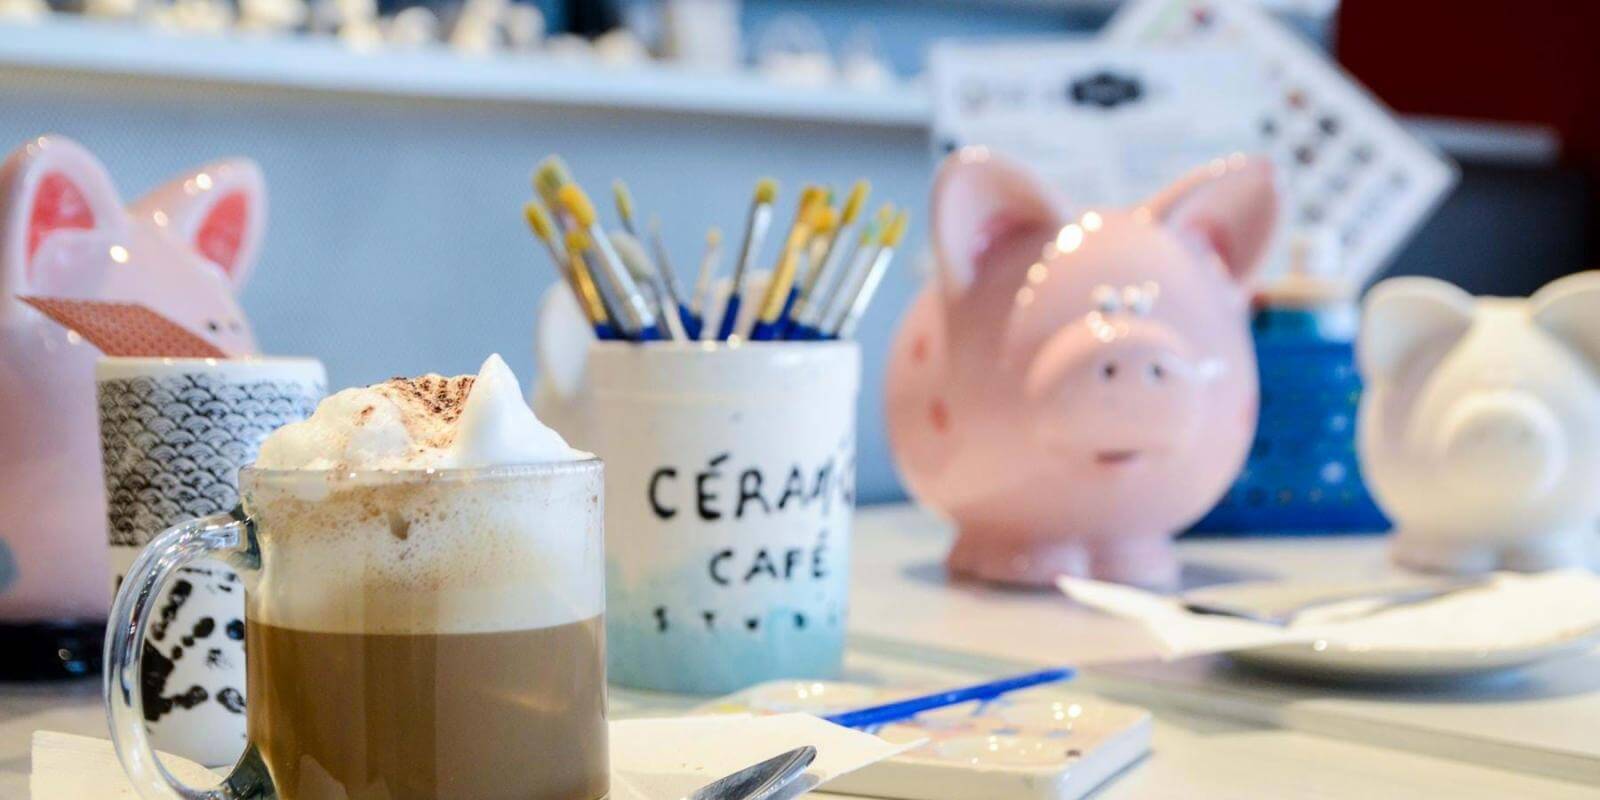 Ceramic Cafe Studio